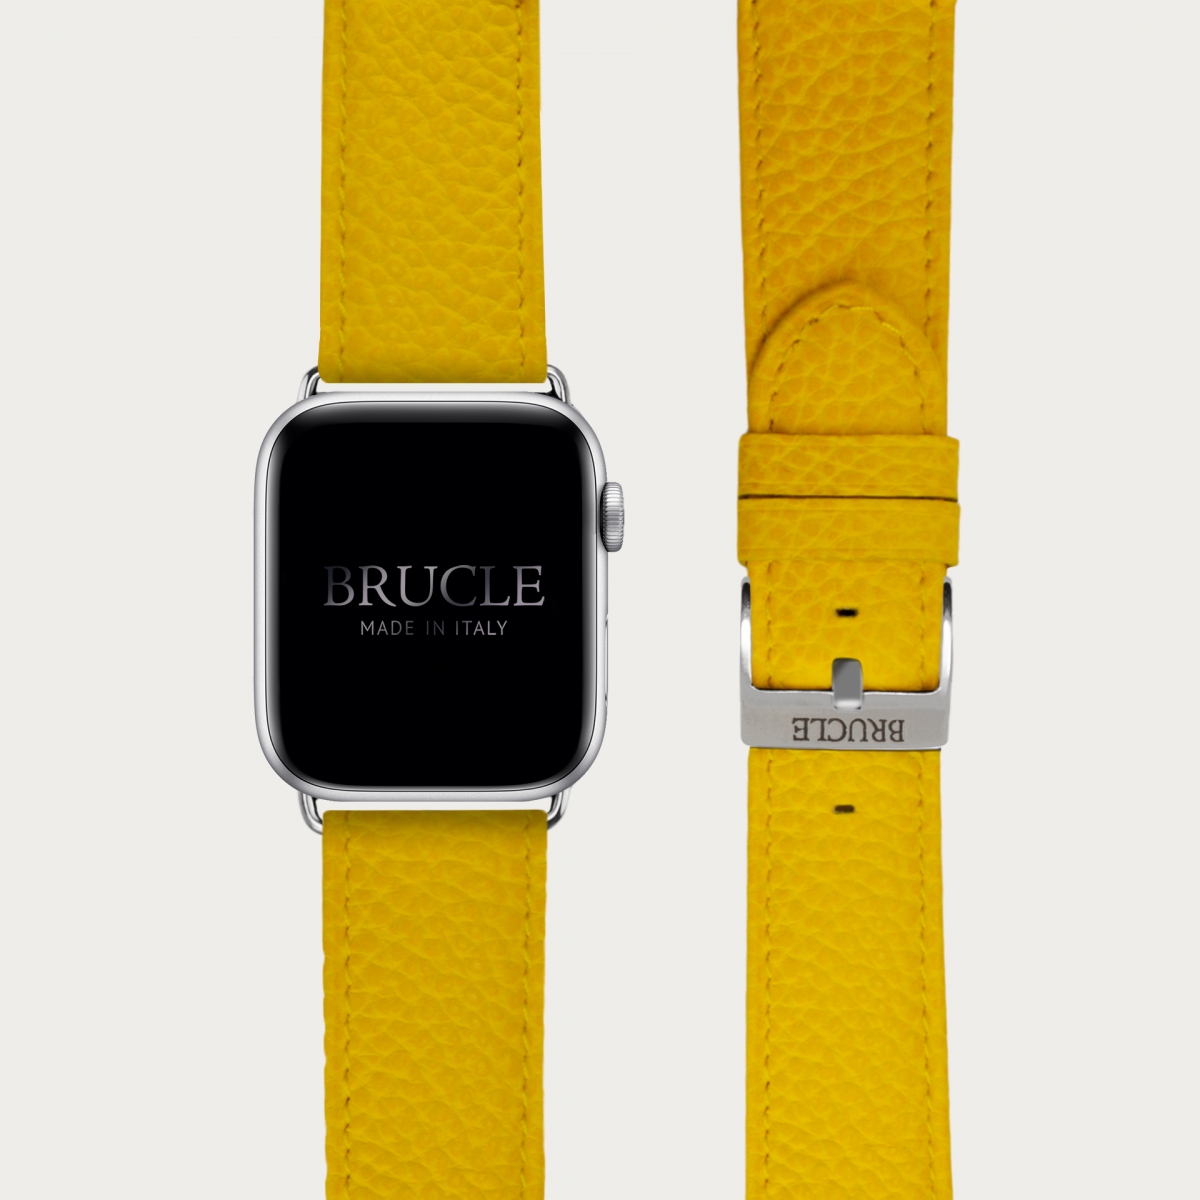 Cinturino giallo in pelle stampa dollaro per orologio, Apple Watch e Samsung Galaxy Watch